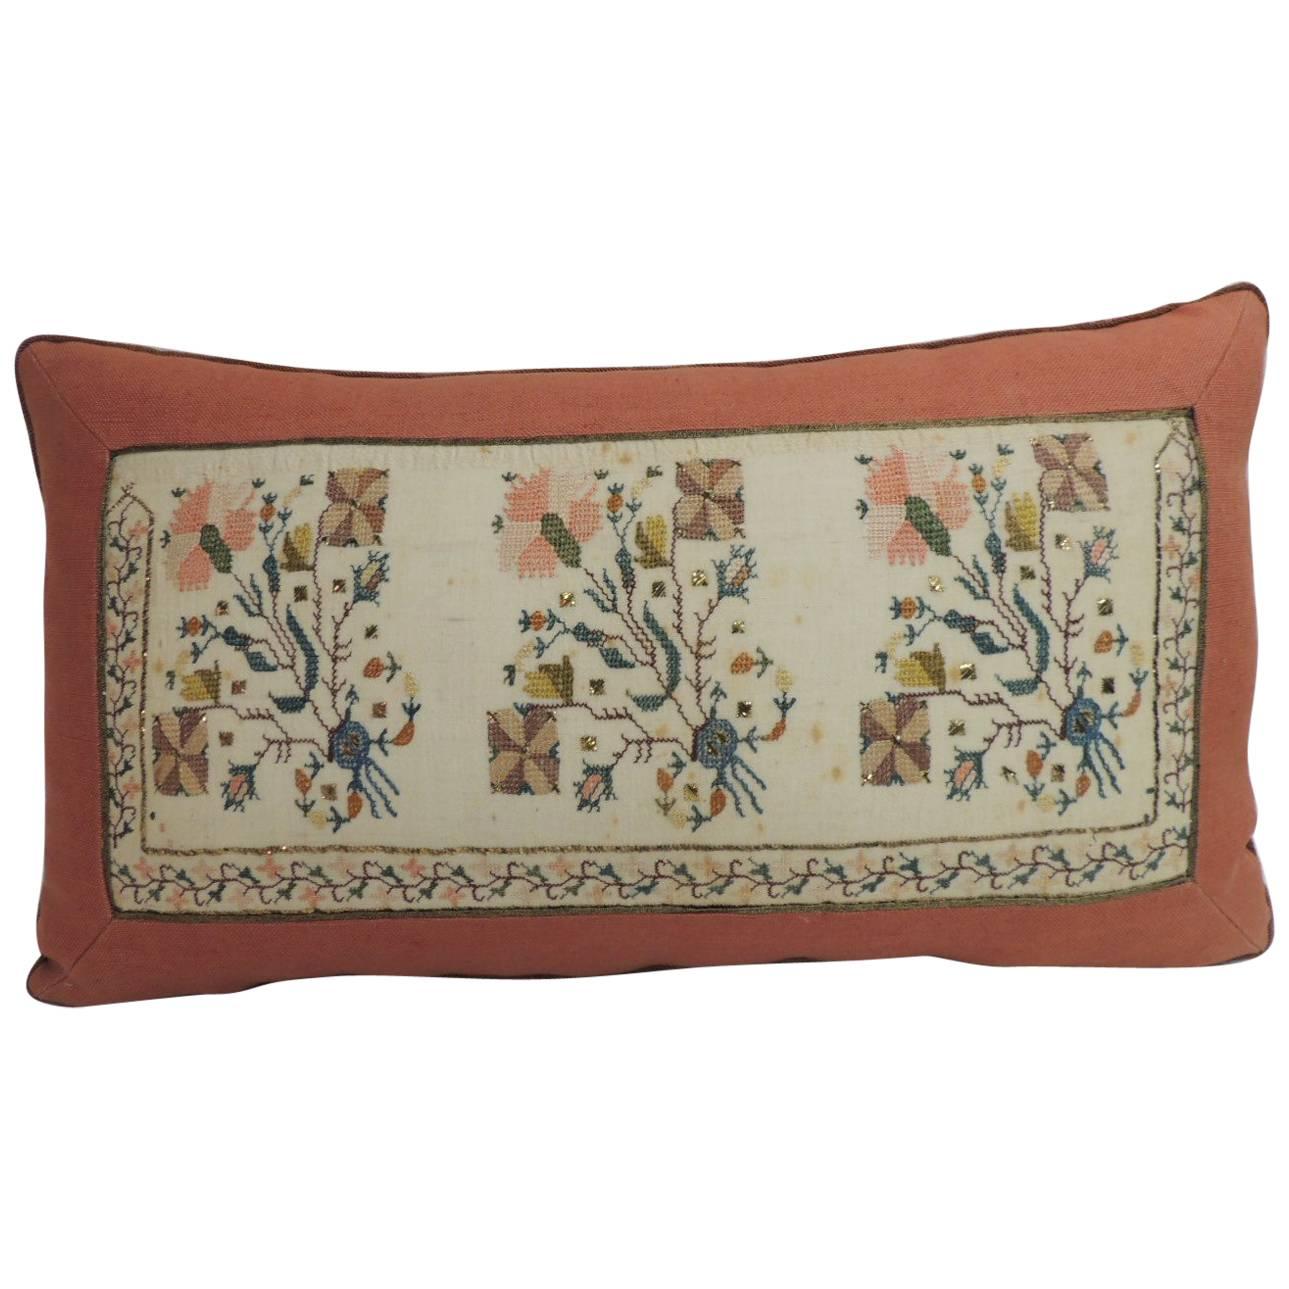 19th Century Turkish Embroidered Linen and Silk Decorative Lumbar Pillow